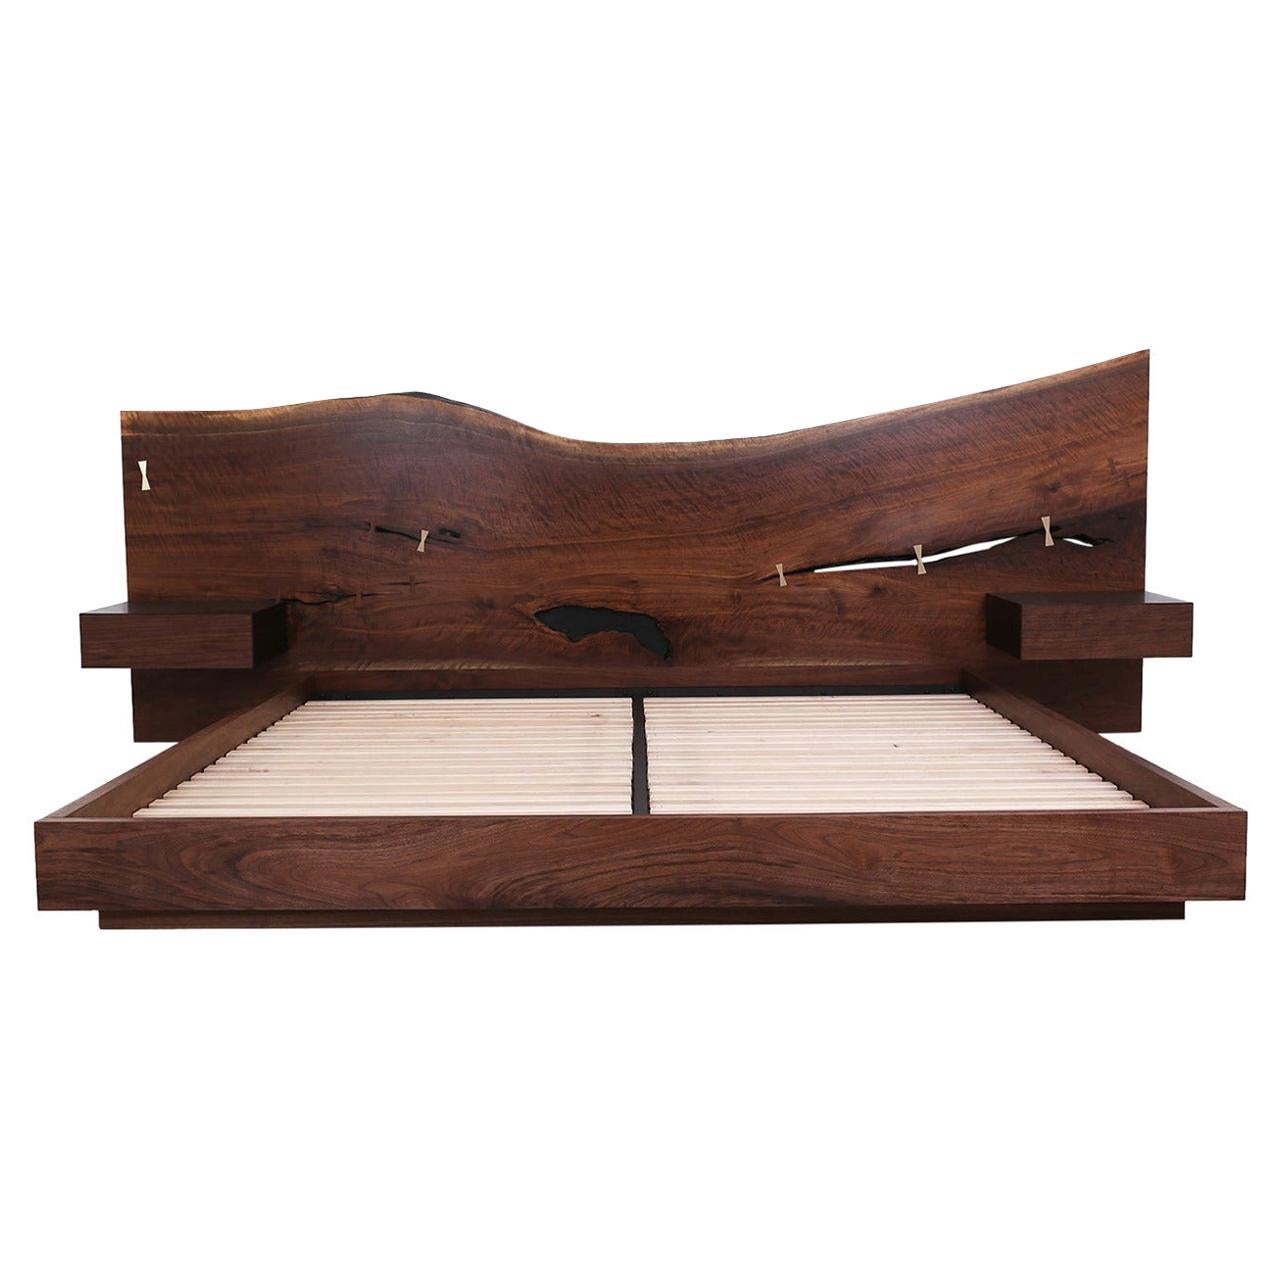 St. Pierre King Bed by Uhuru, Walnut Slab Headboard and Built in Nightstands